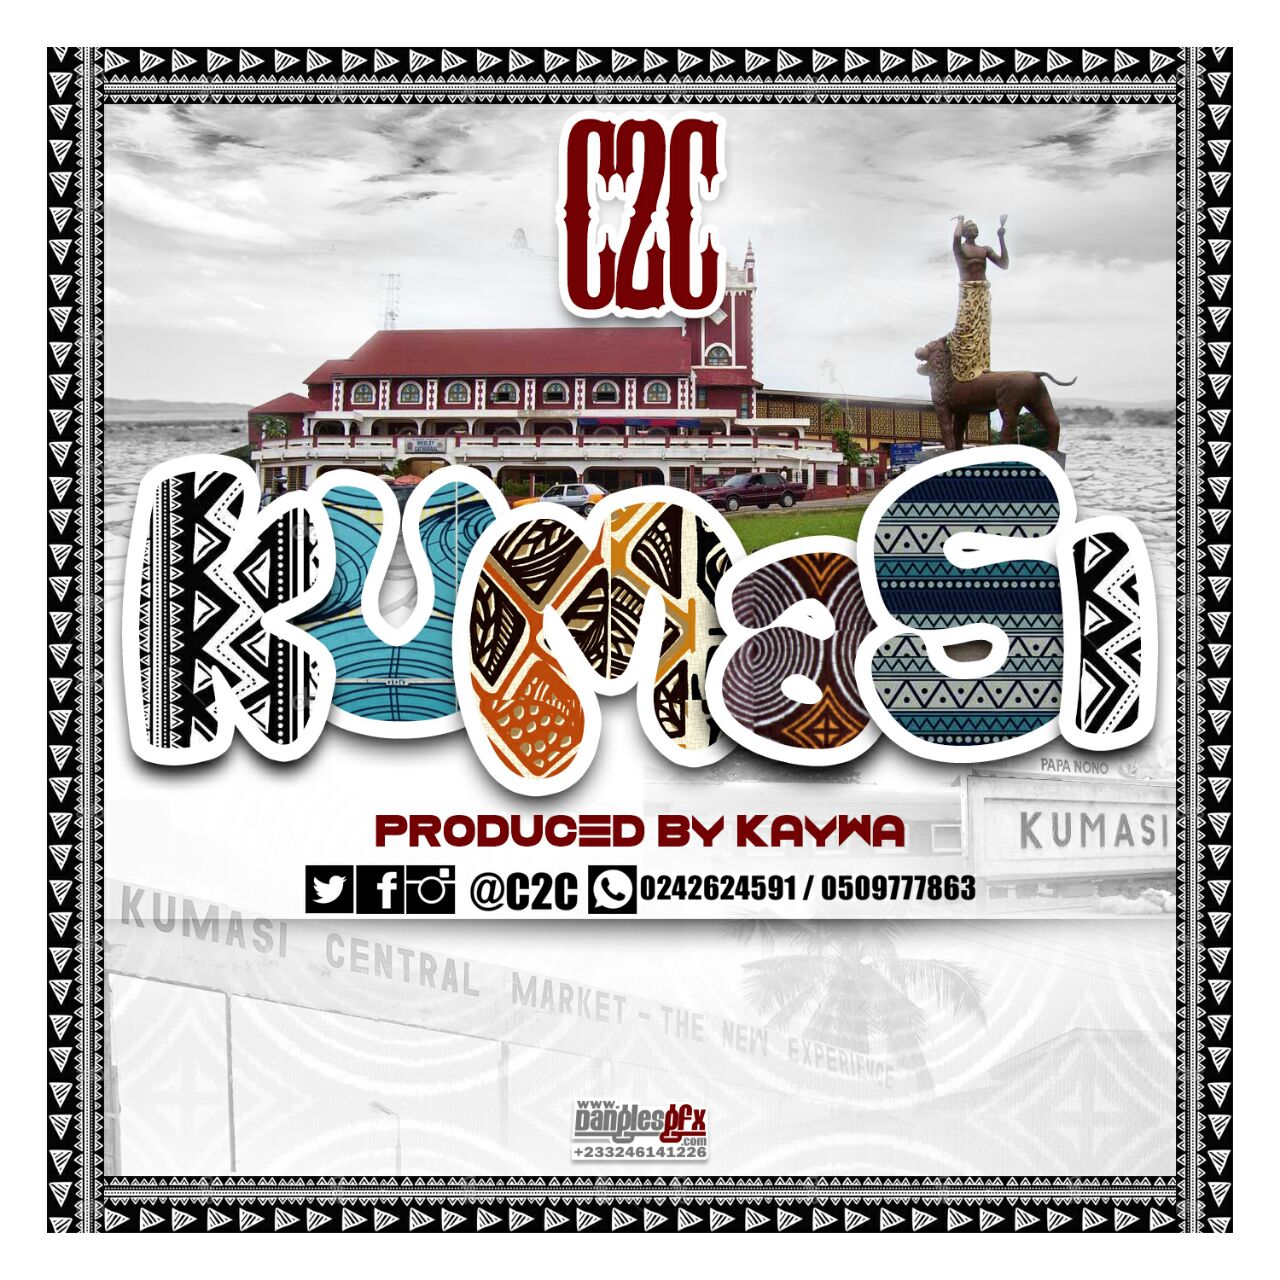 Cc Kumasi Prod By Kaywa